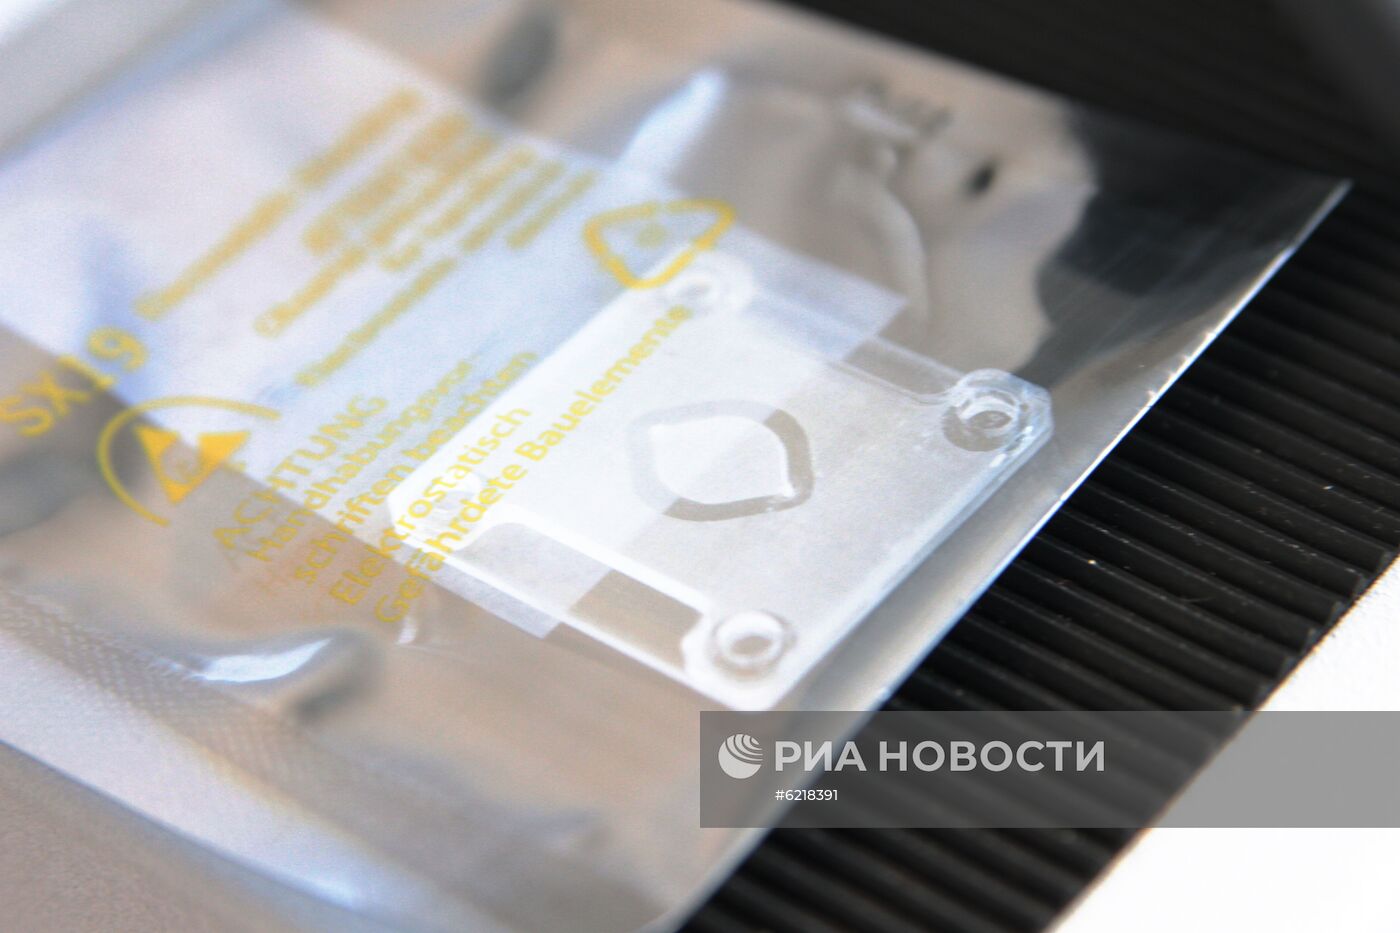 ФМБА представило тест-системы на основе чипов для диагностики коронавируса